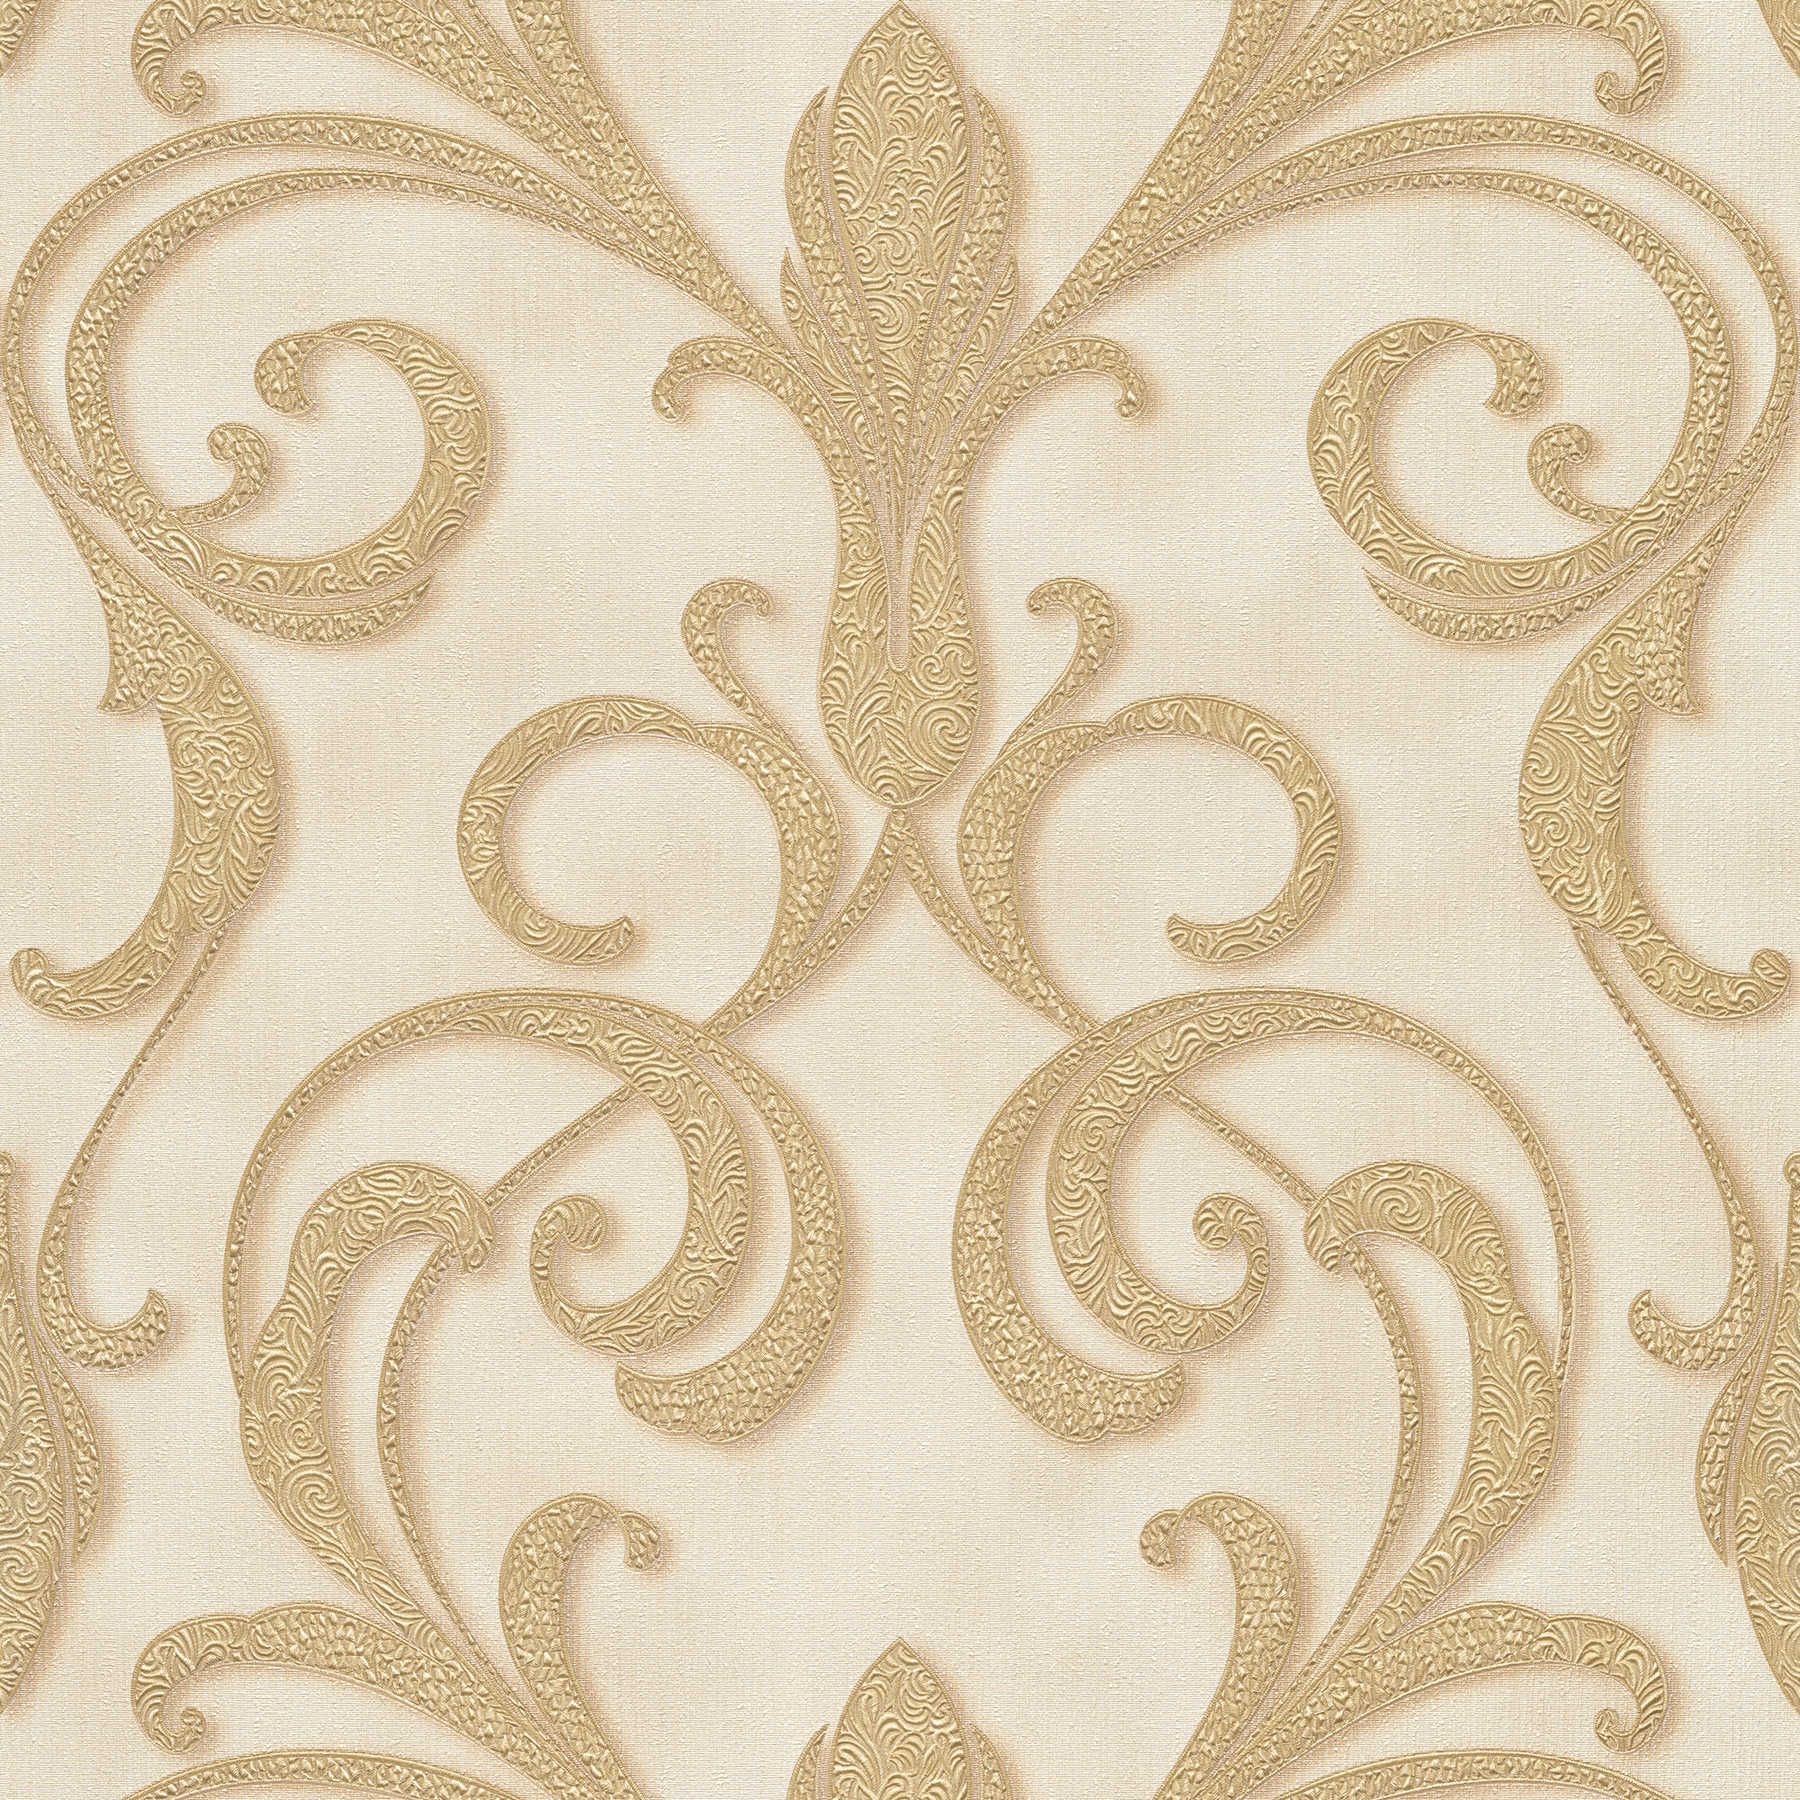 Metallic behang met filigraan ornament patroon - crème
